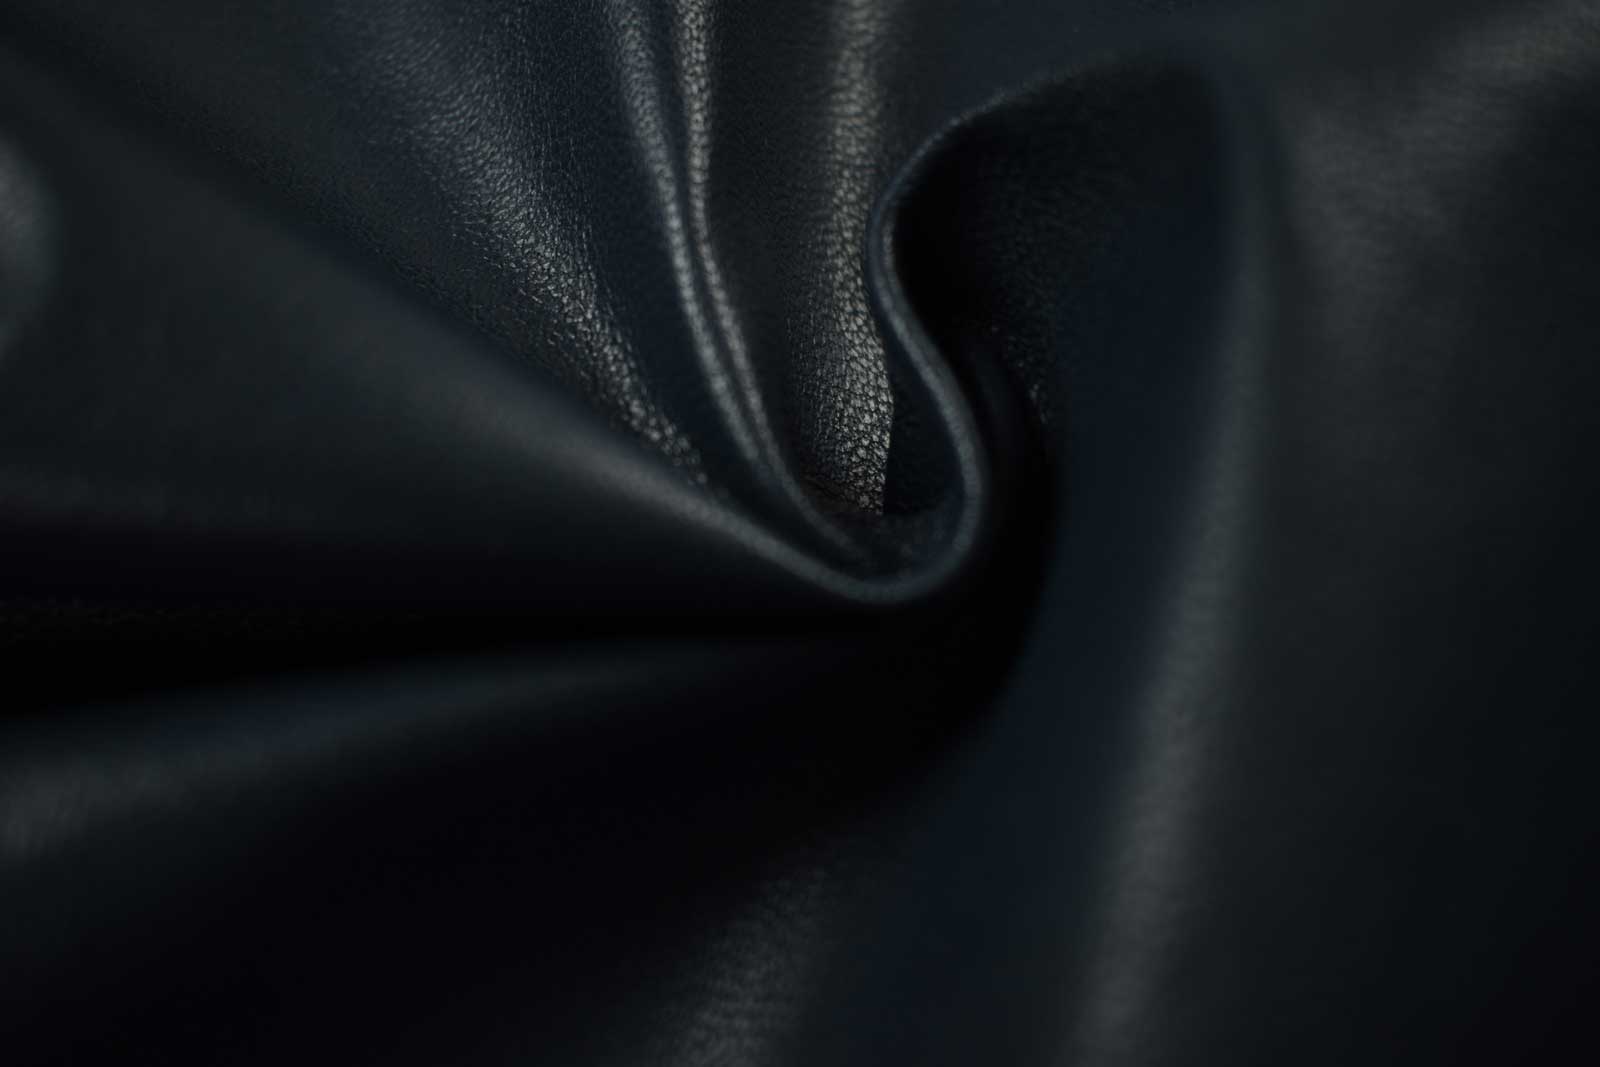 Sheep Nappa Leather 6 - 17 sq ft - Garment Quality